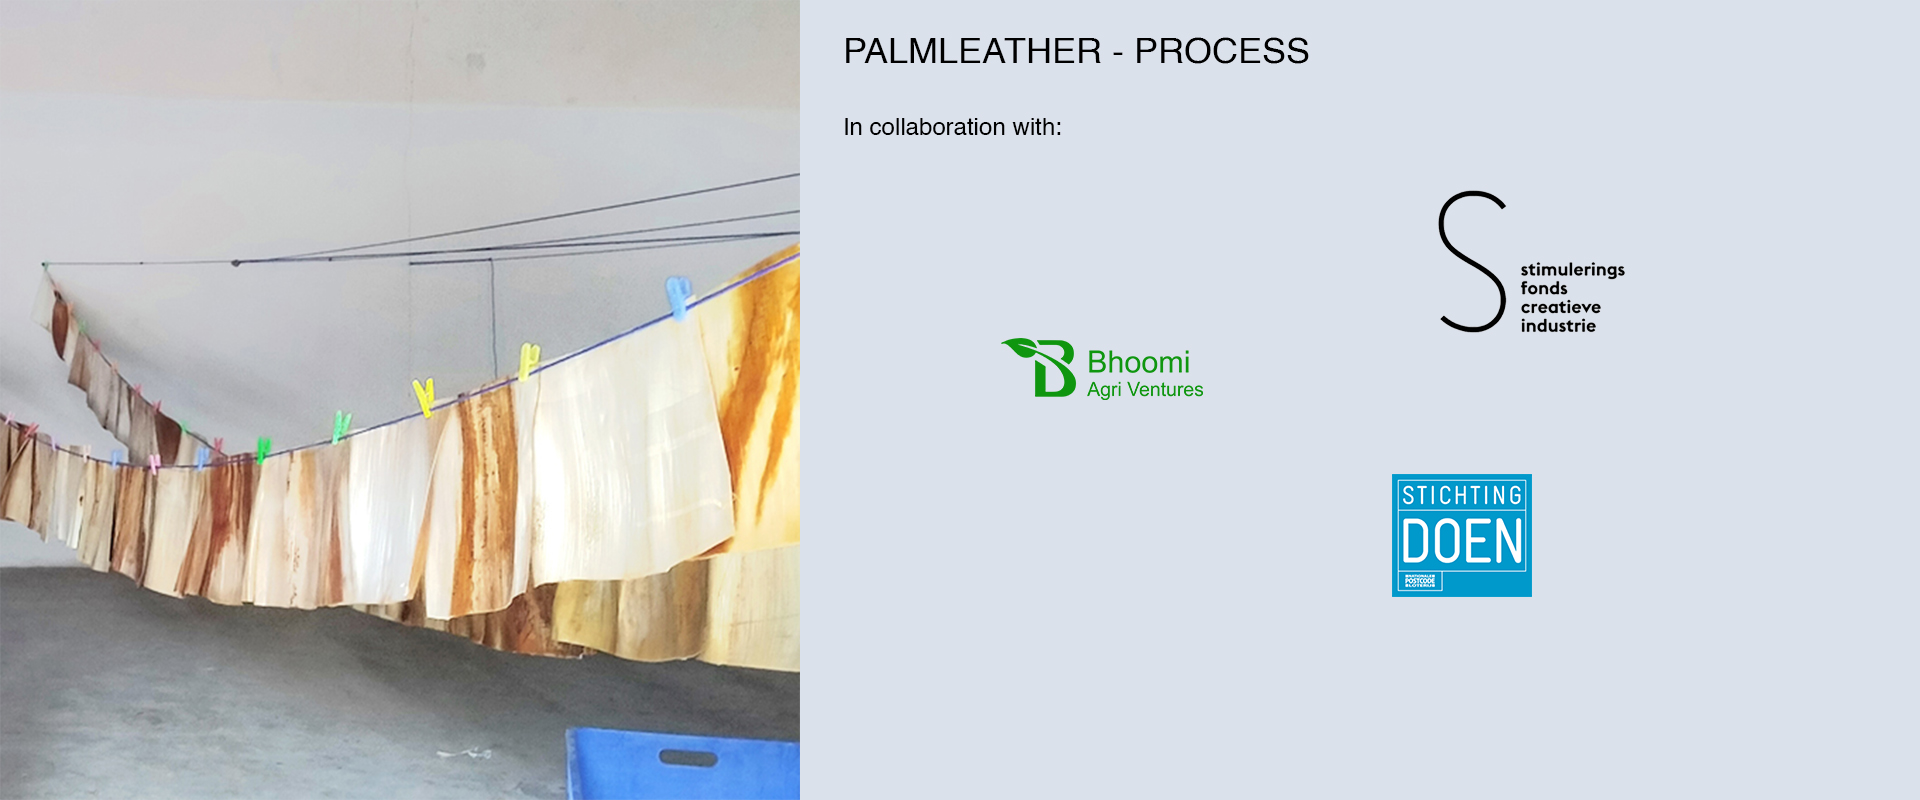 Palmleather - process